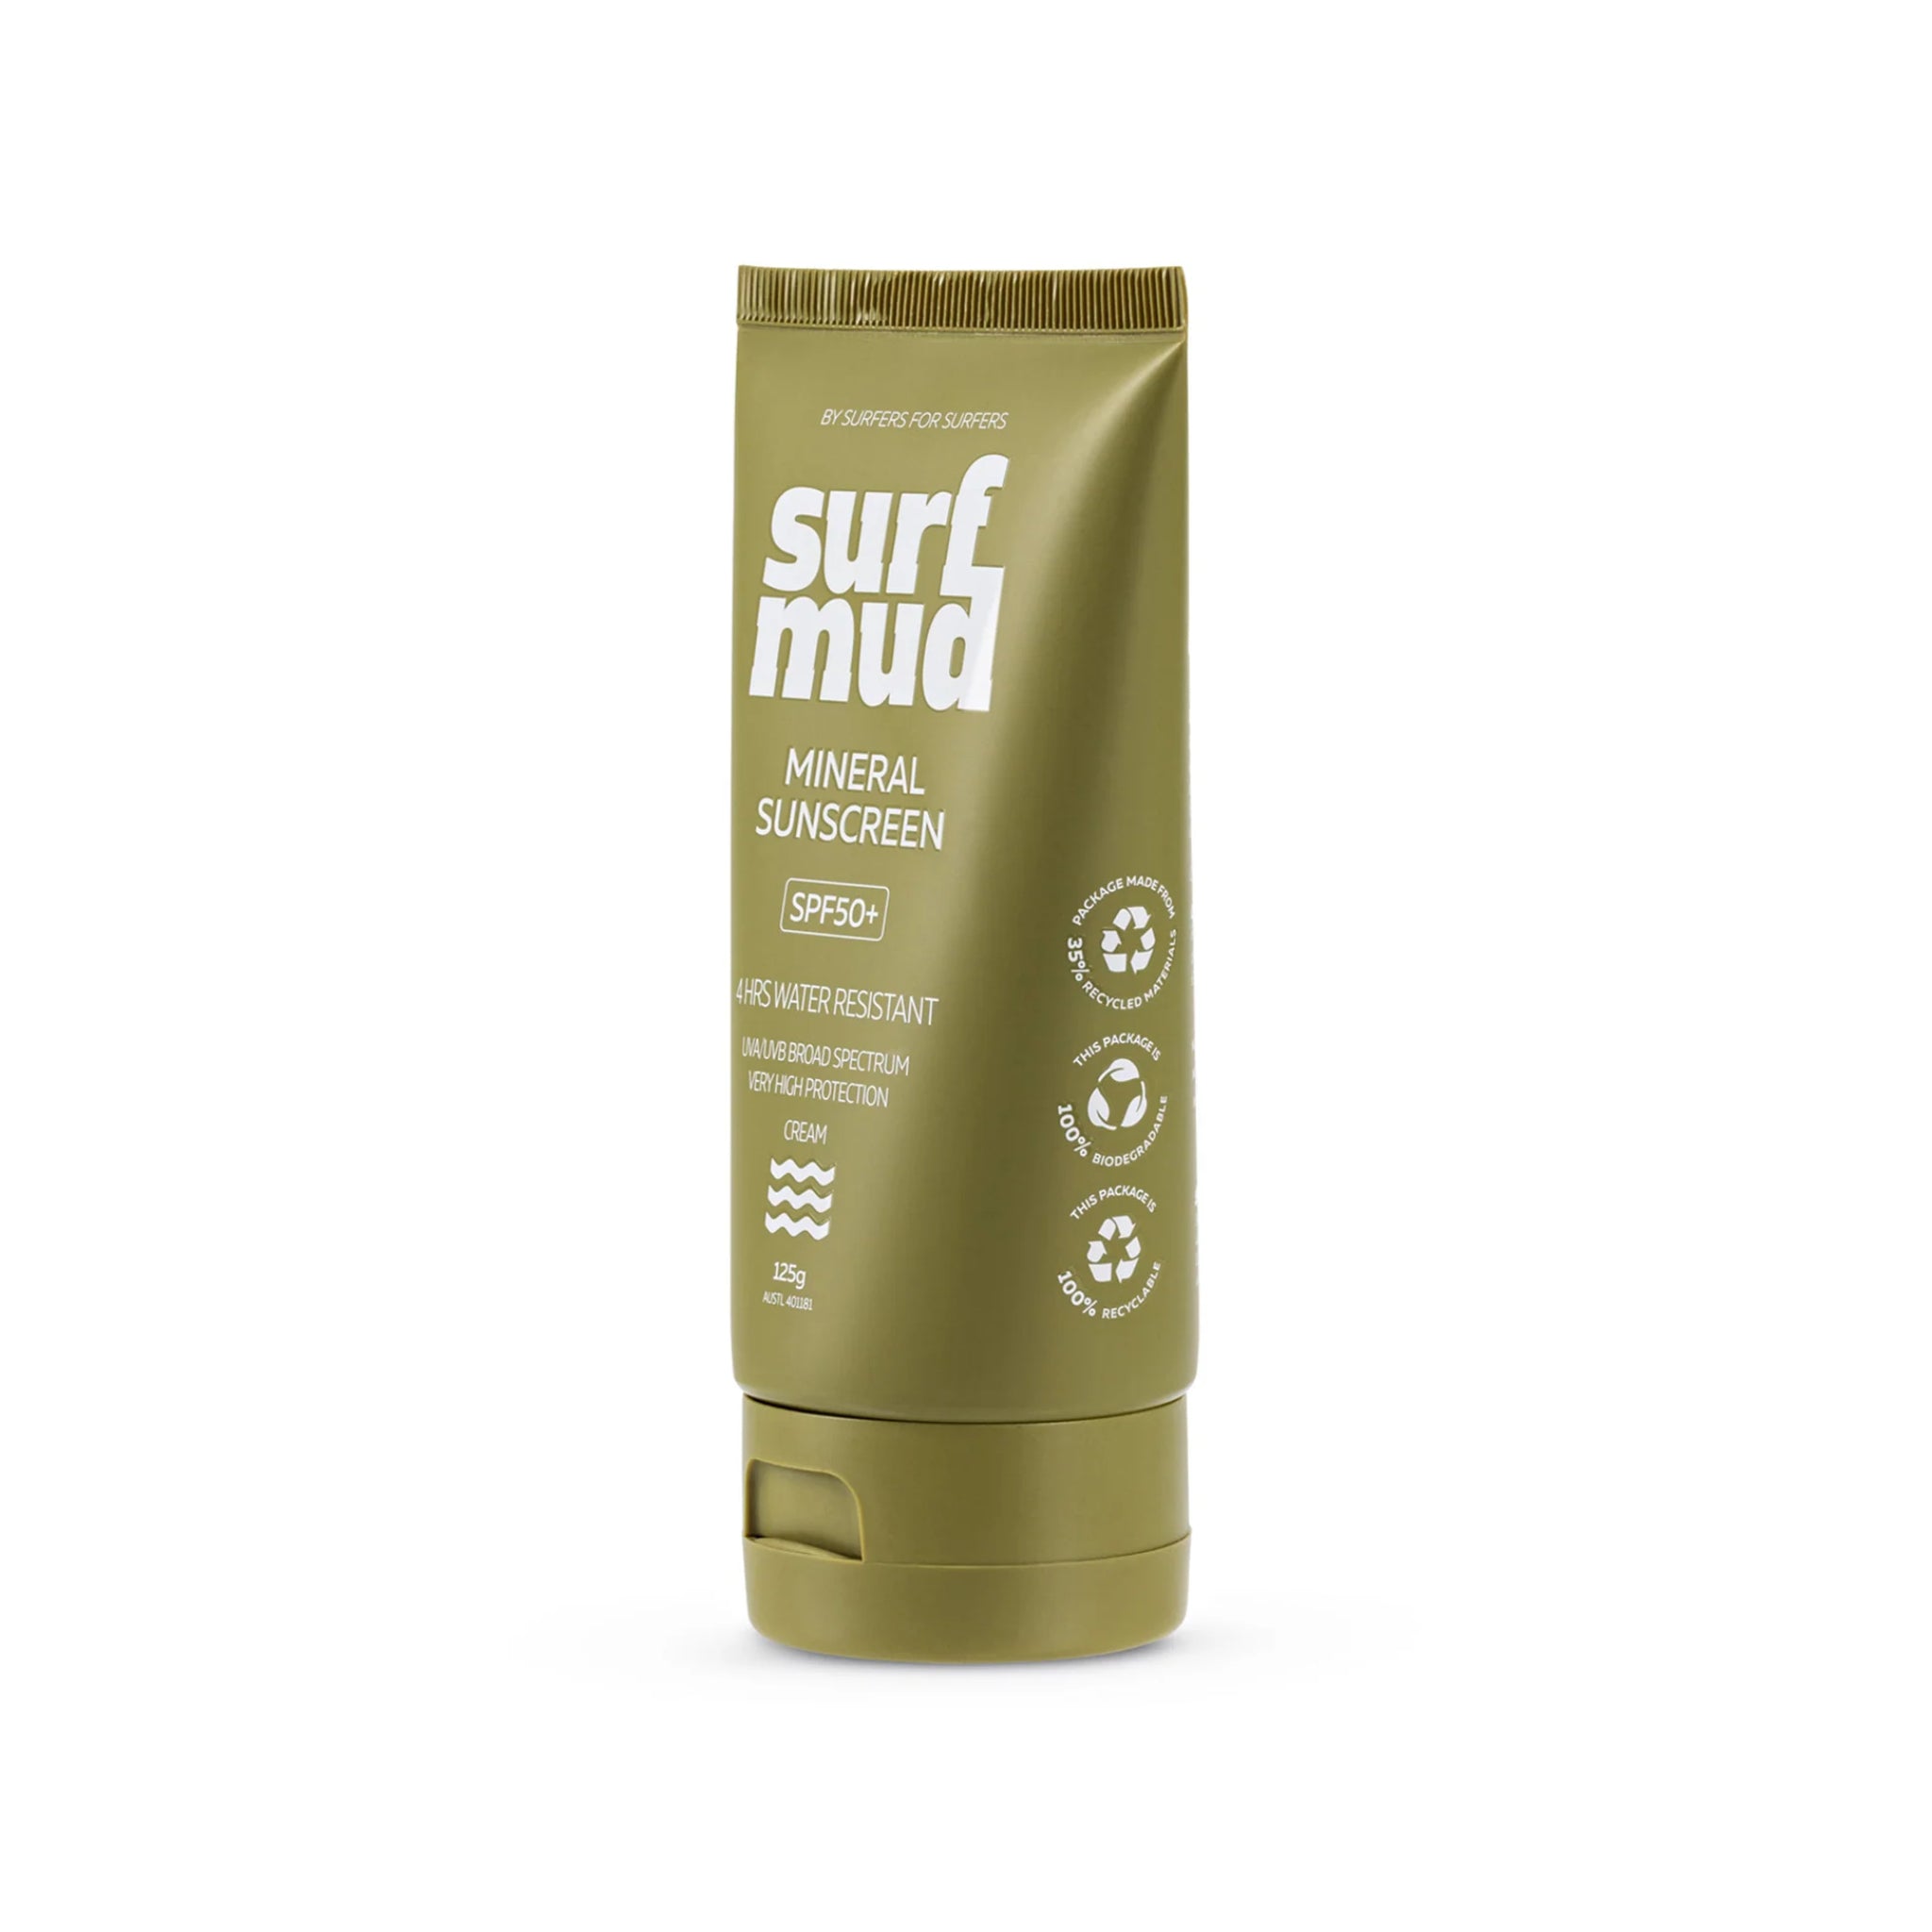 Surf Mud Mineral Sunscreen SPF 50 - 125g